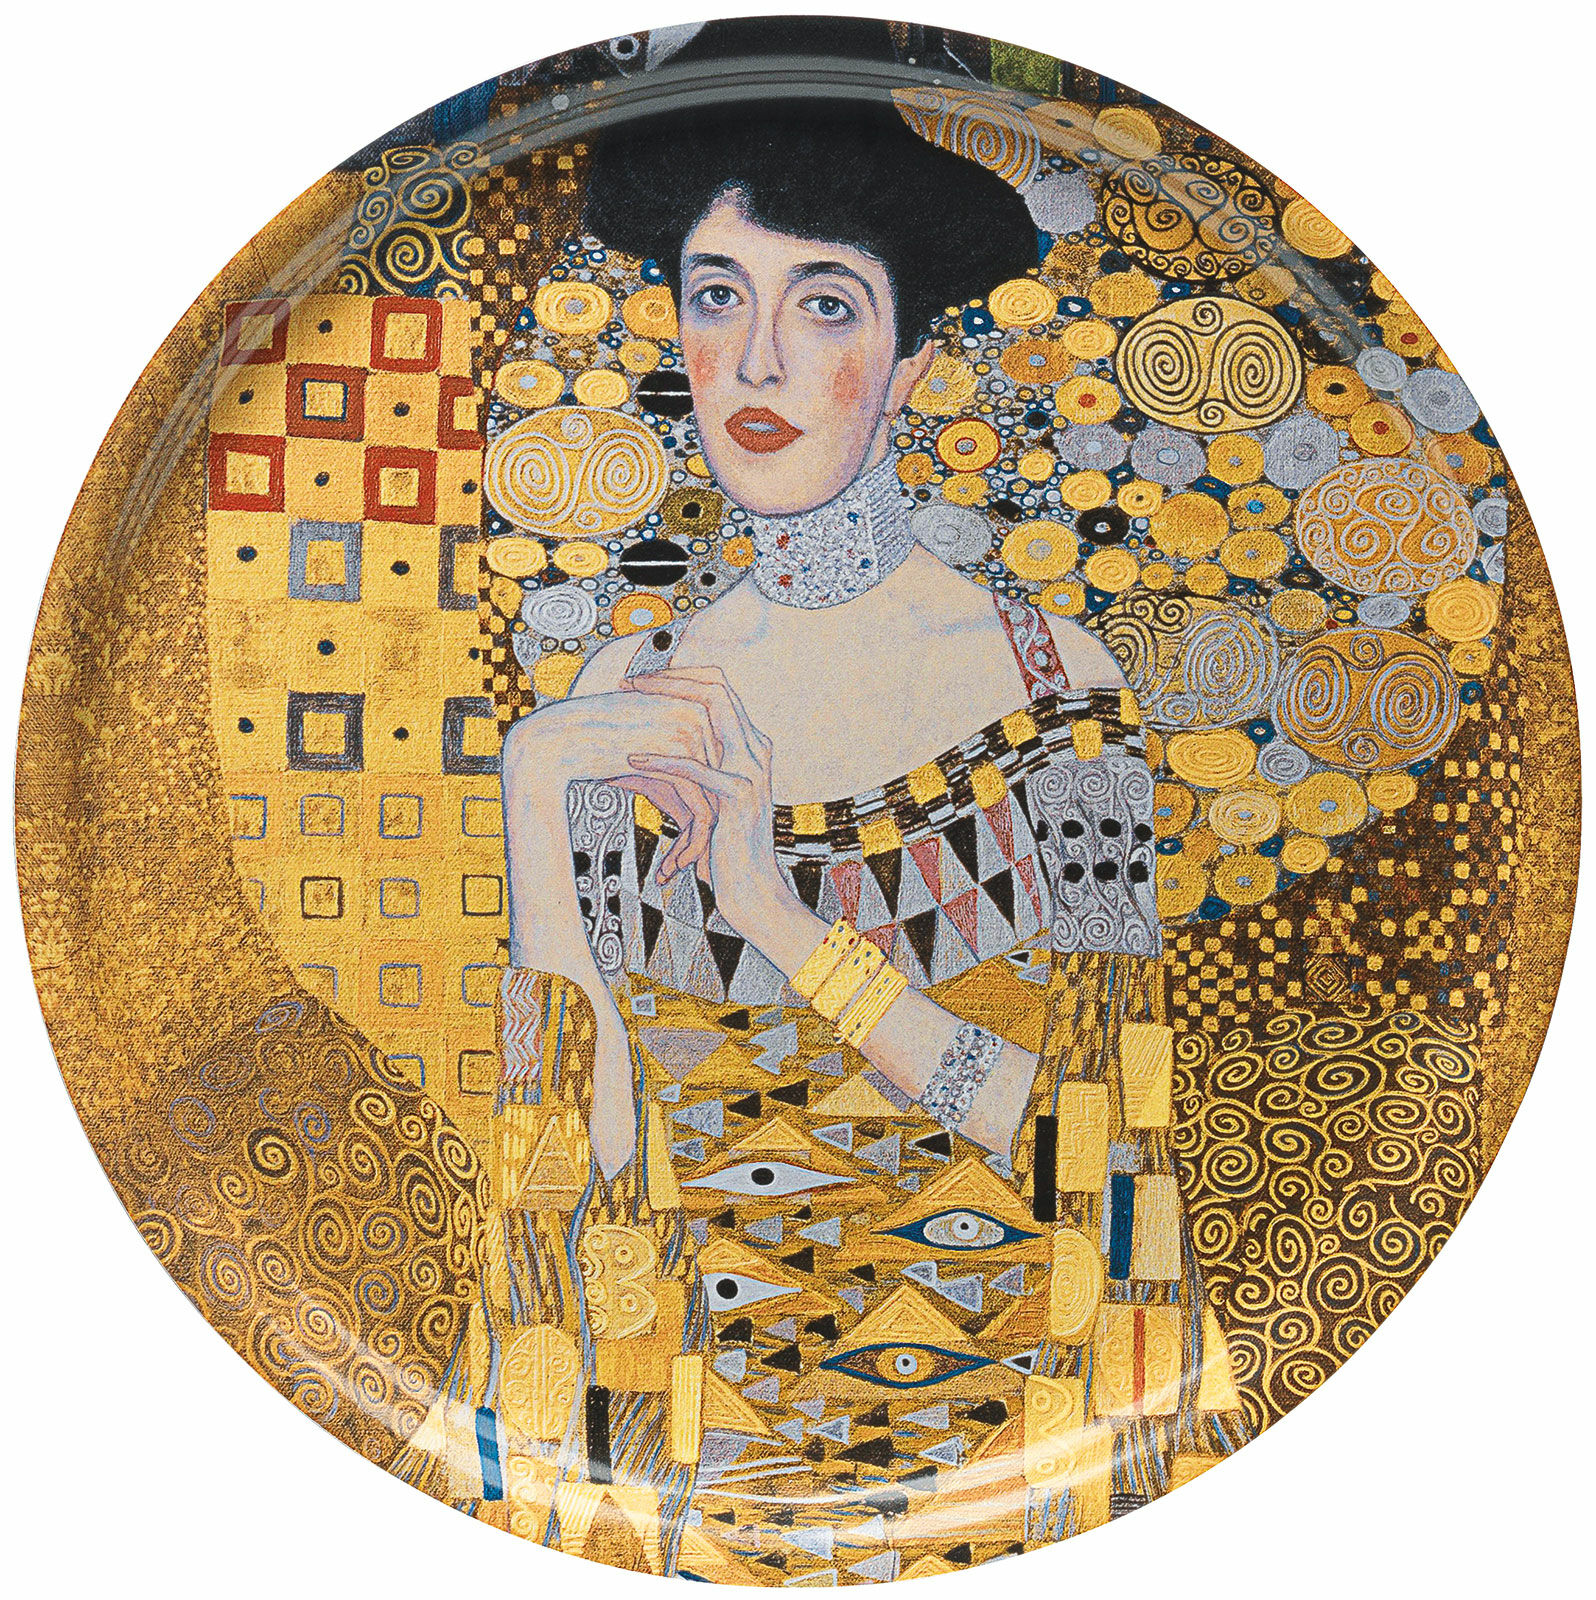 Træbakke "Adele Bloch-Bauer" von Gustav Klimt